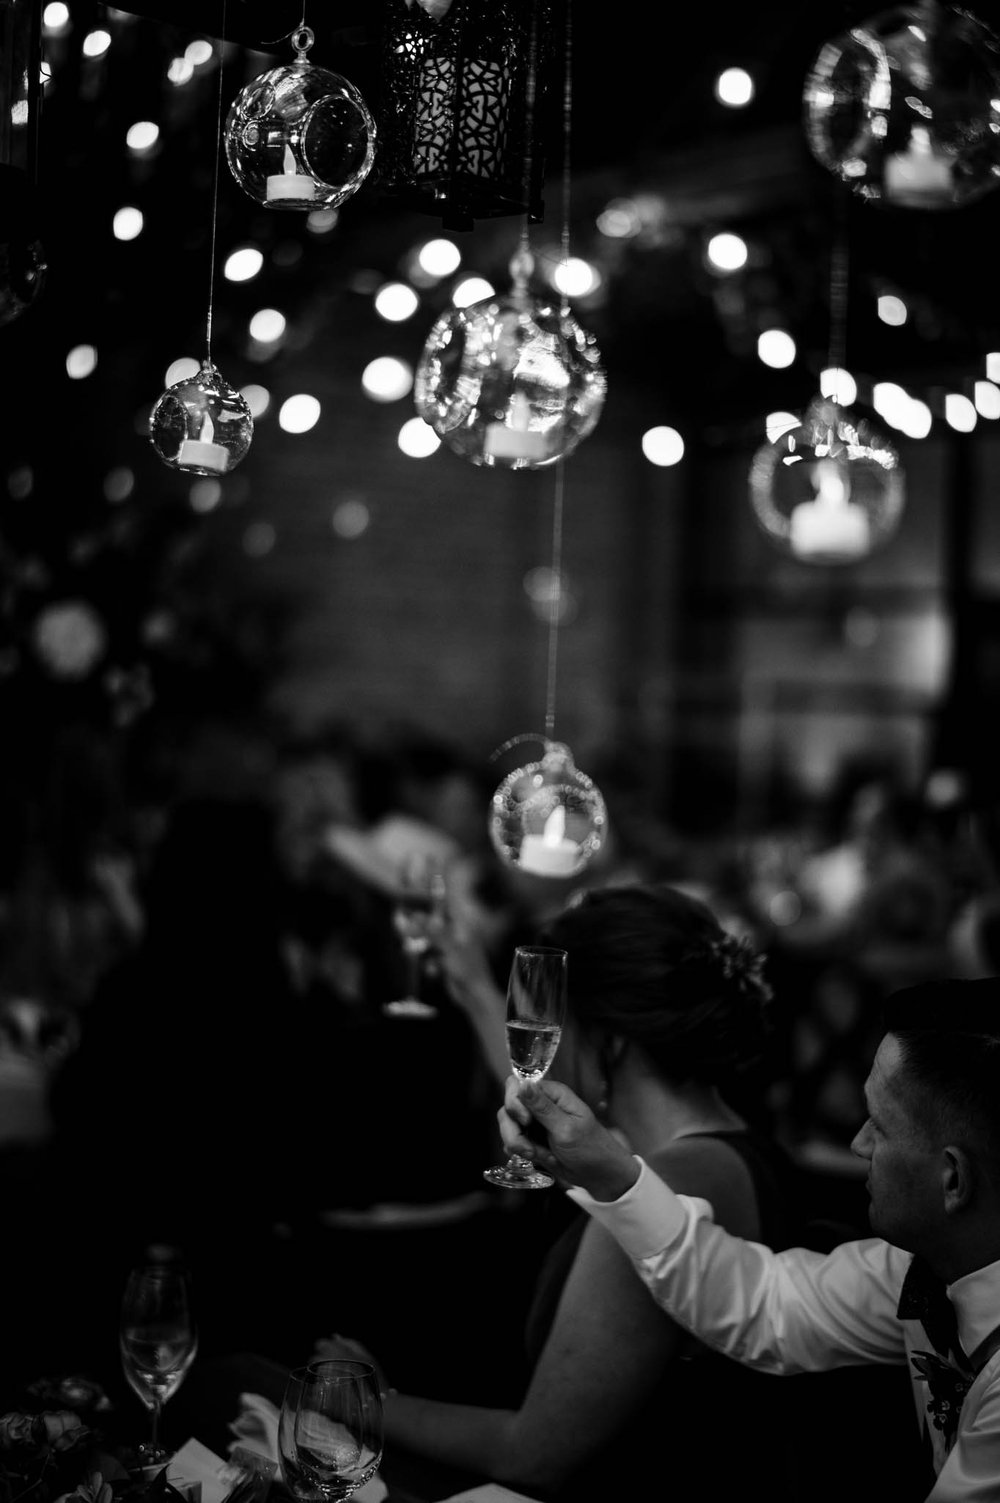 a wedding guest raises their glass after a toast